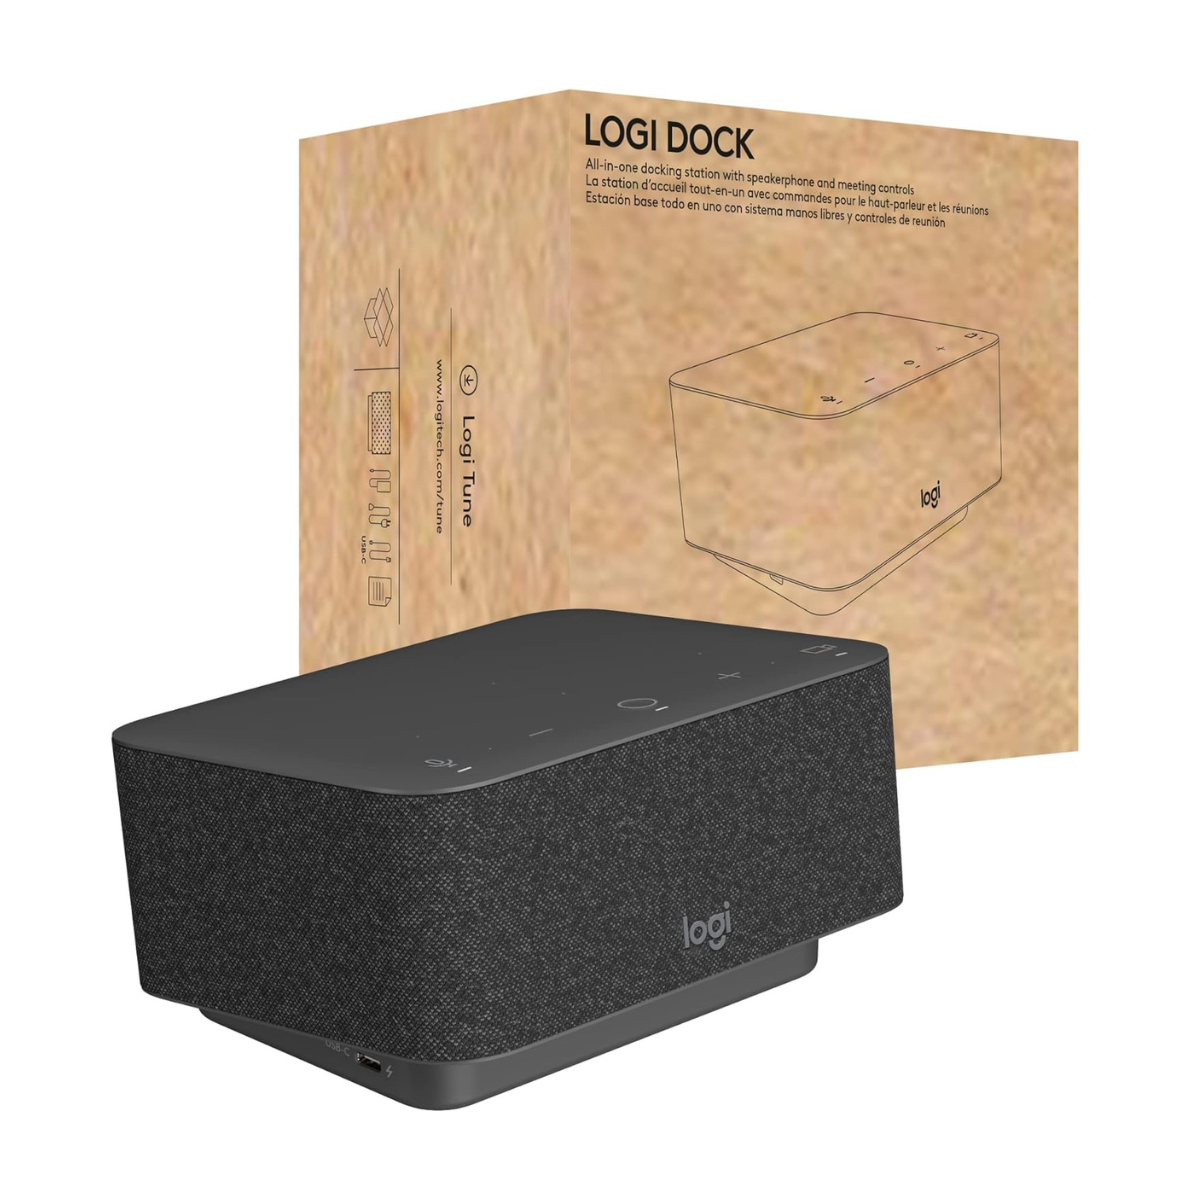 The Logi Dock USB-C Docking Station